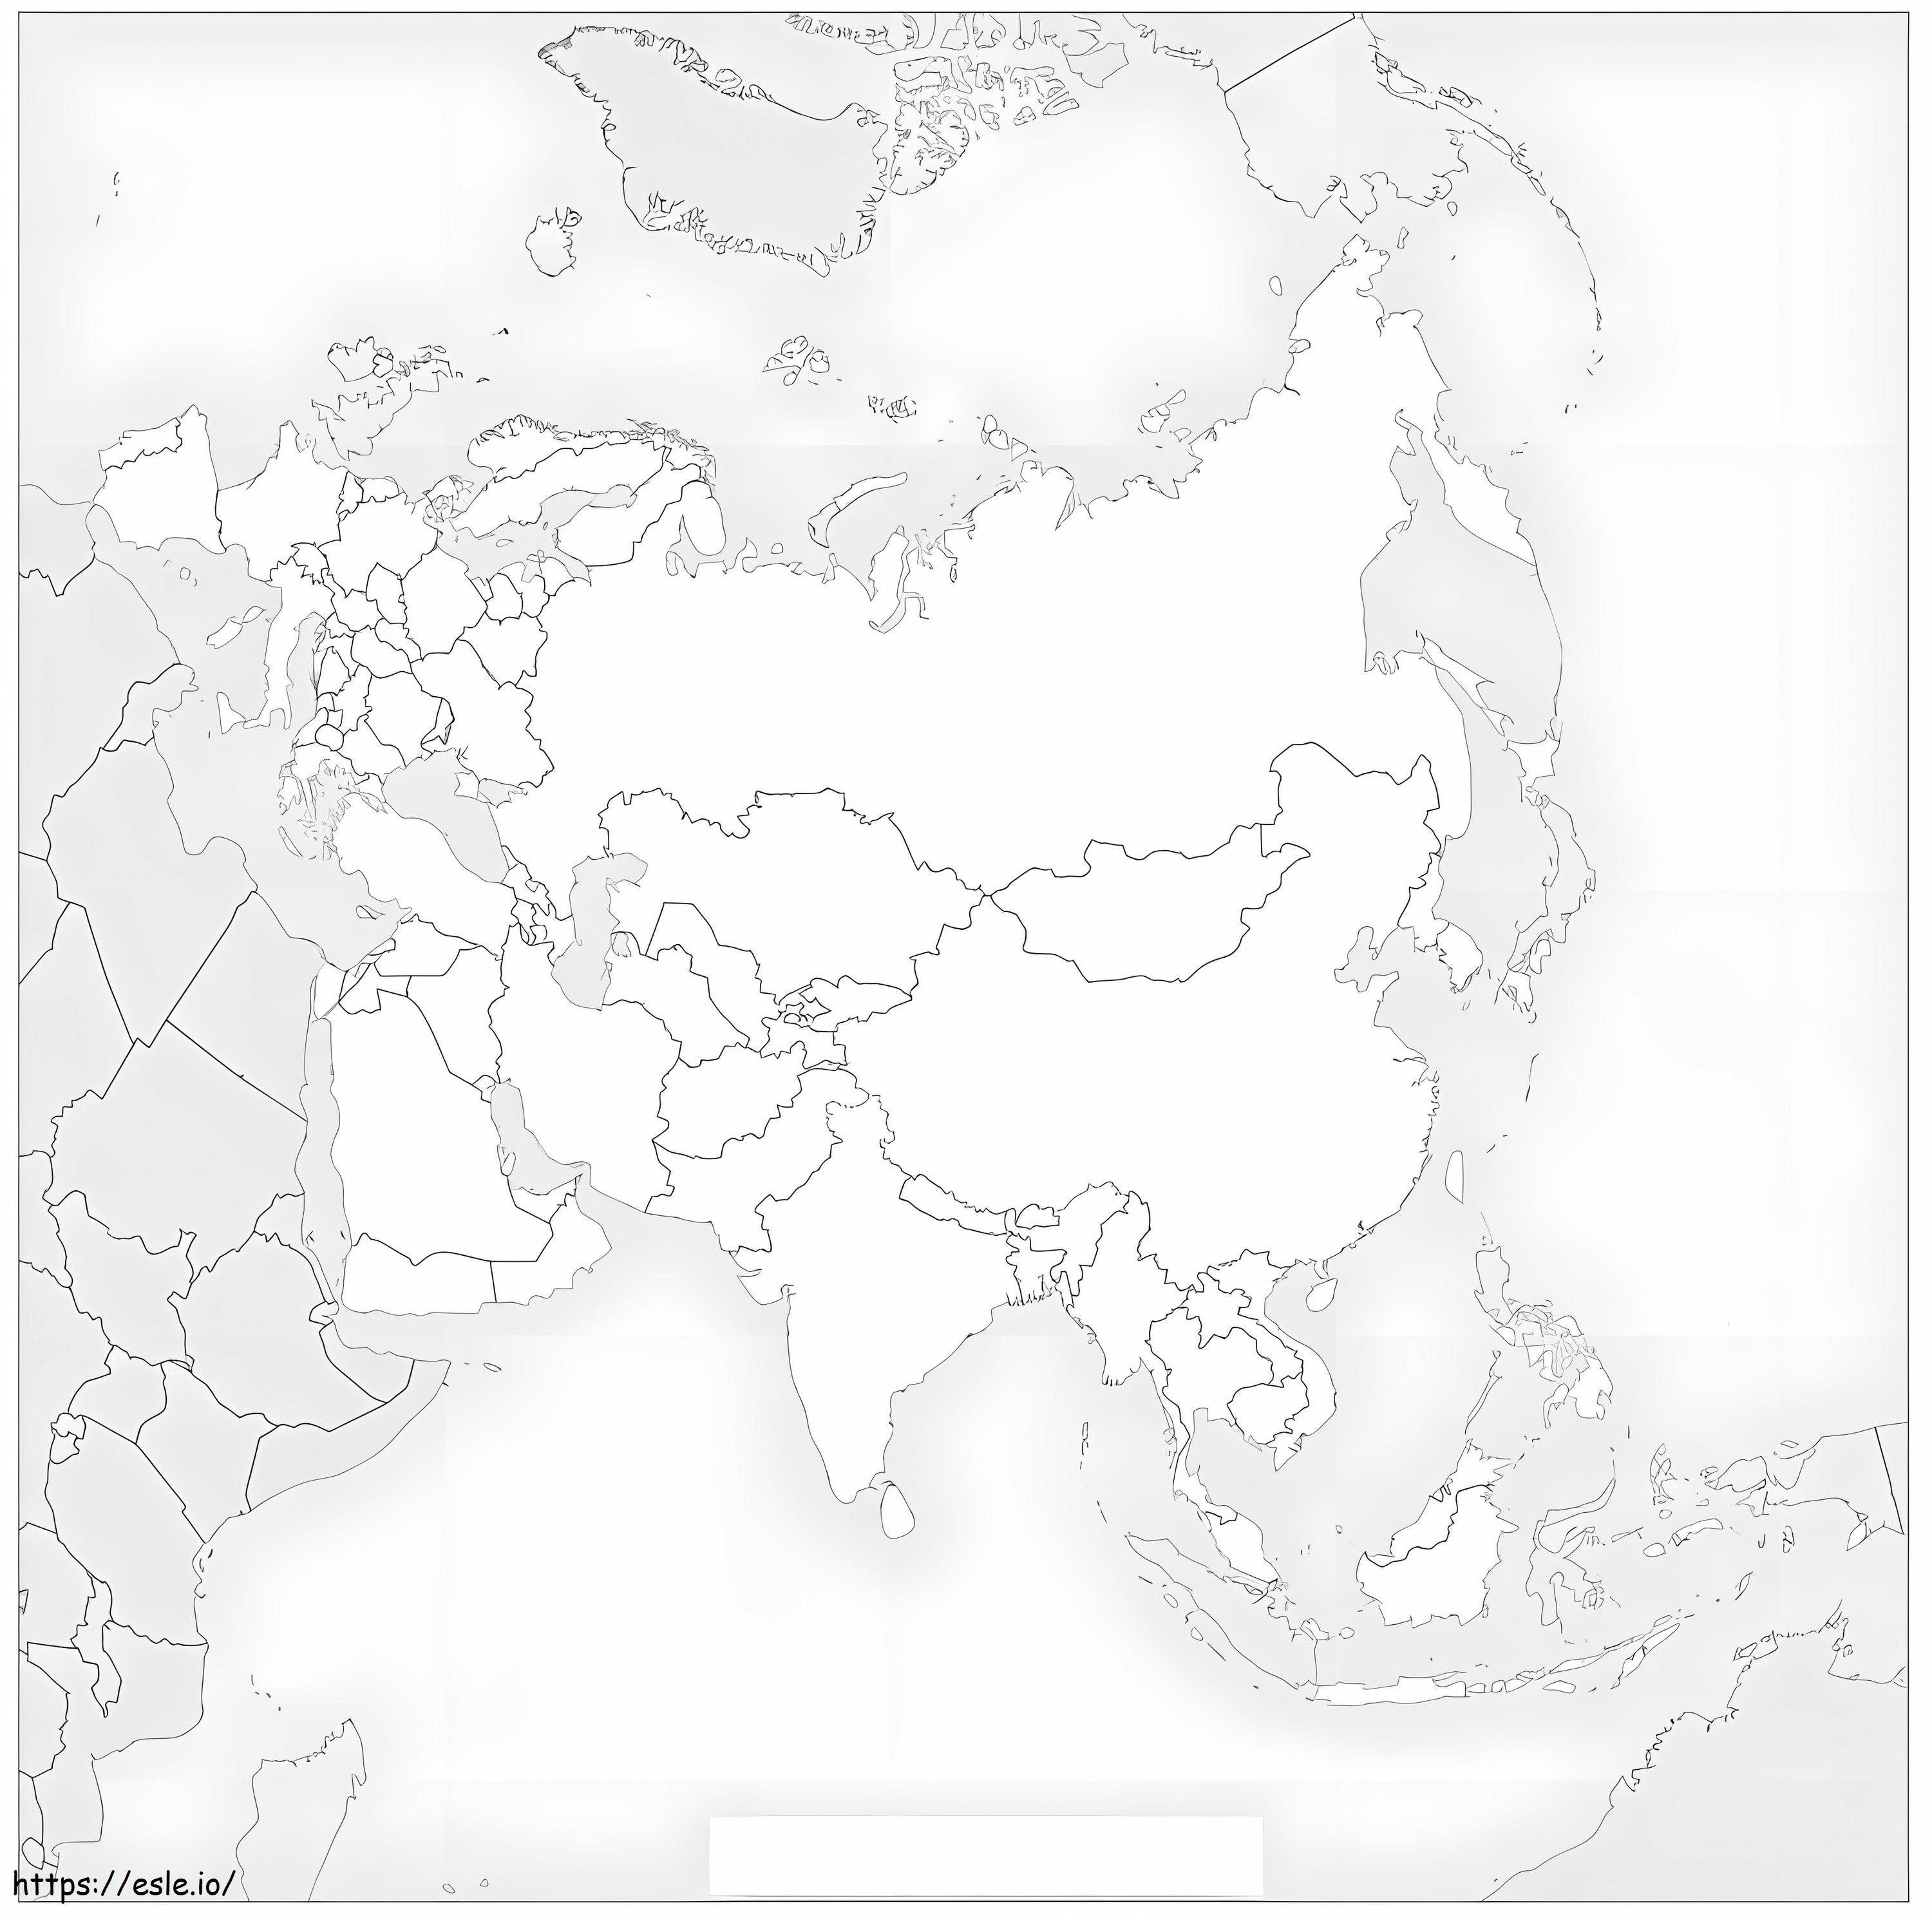 Halaman Mewarnai Peta Eurasia Gambar Mewarnai